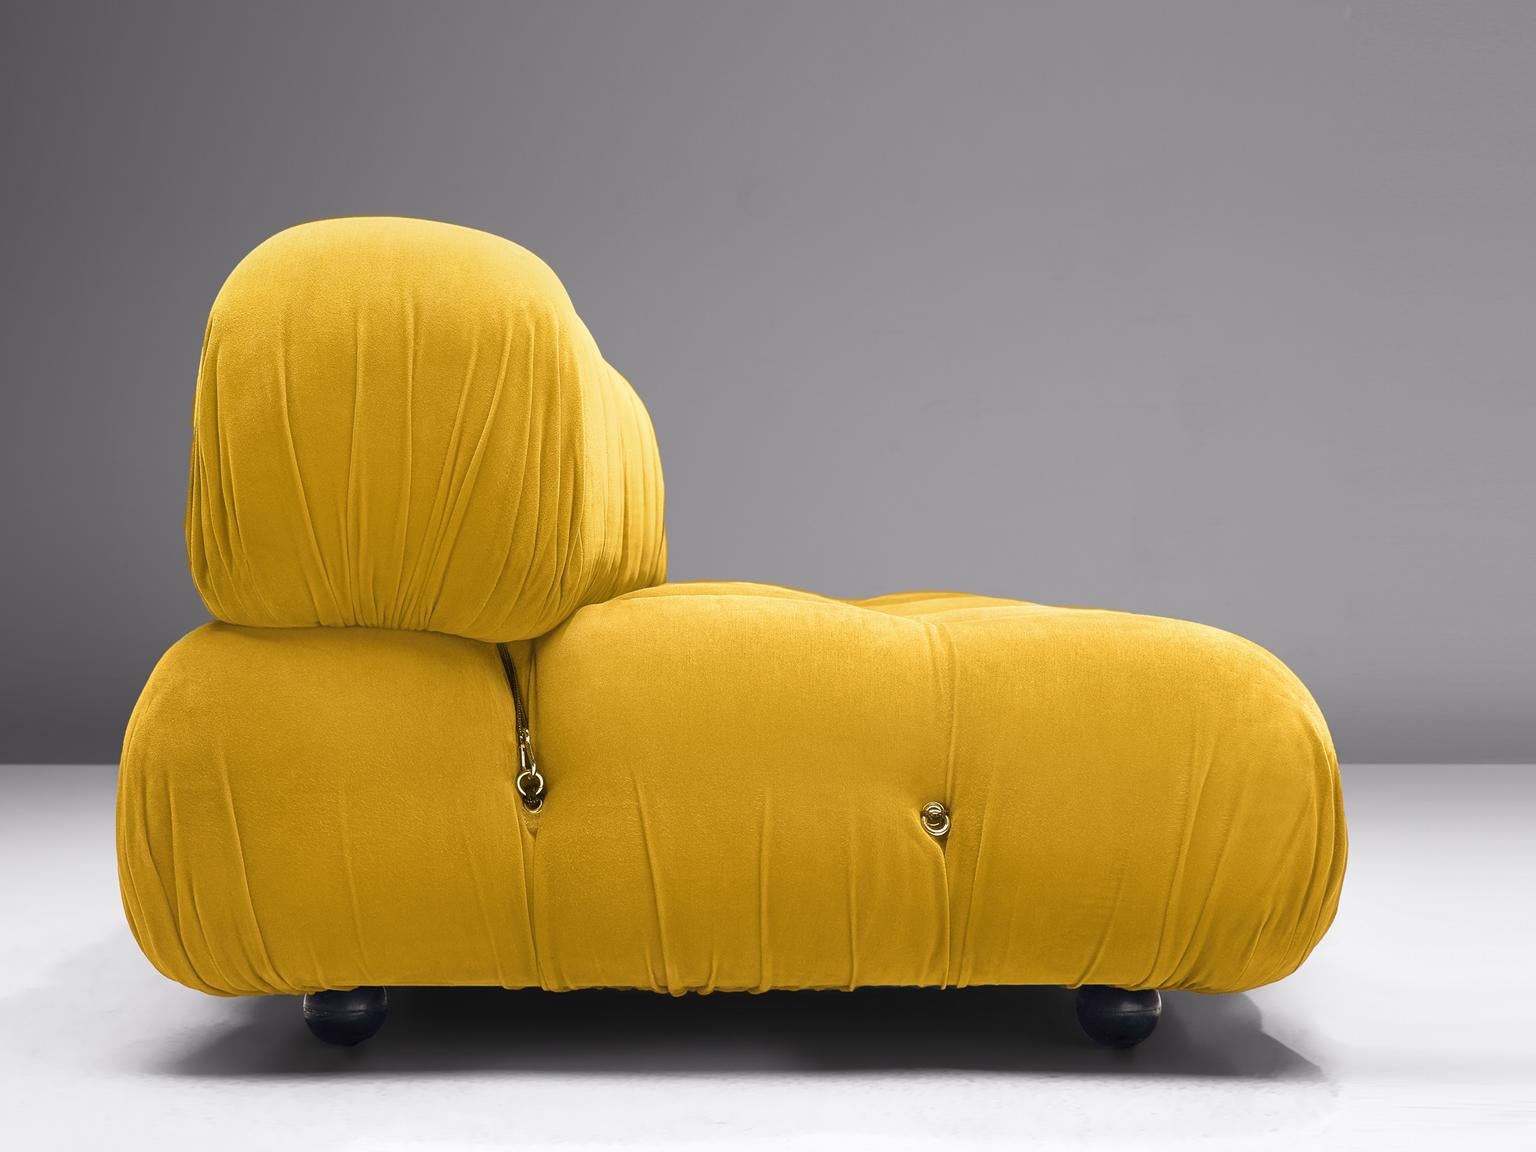 Fabric Mario Bellini Camaleonda Modular Sofa Reupholstered in Sunflower Yellow Velvet